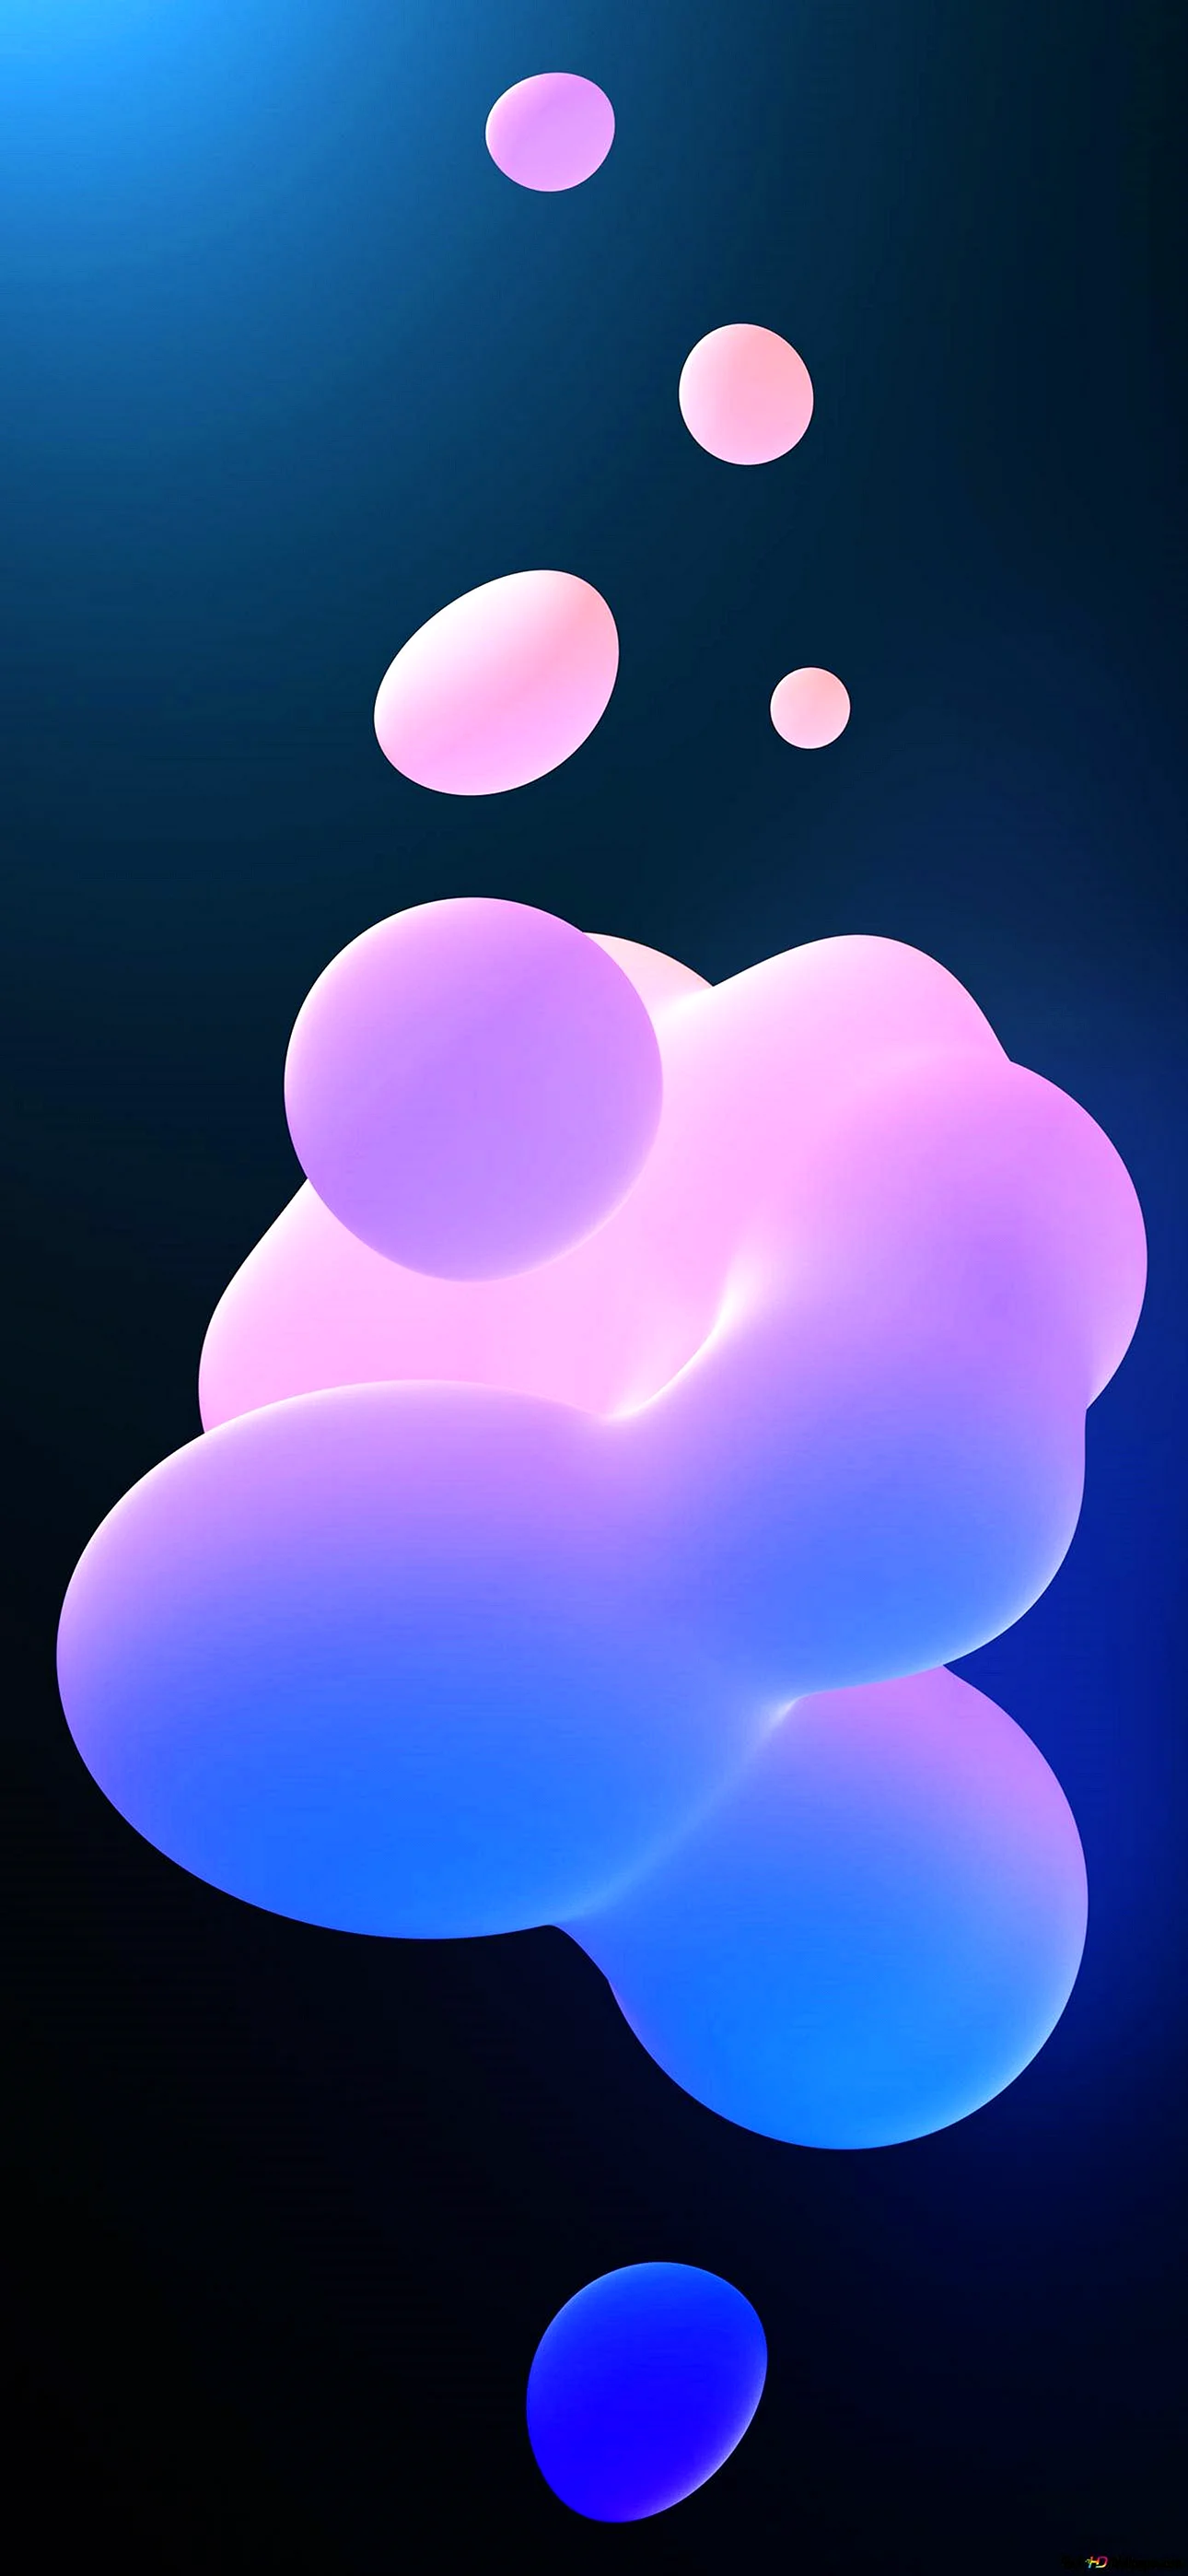 Design Bubble Wallpaper for iPhone 14 Pro Max